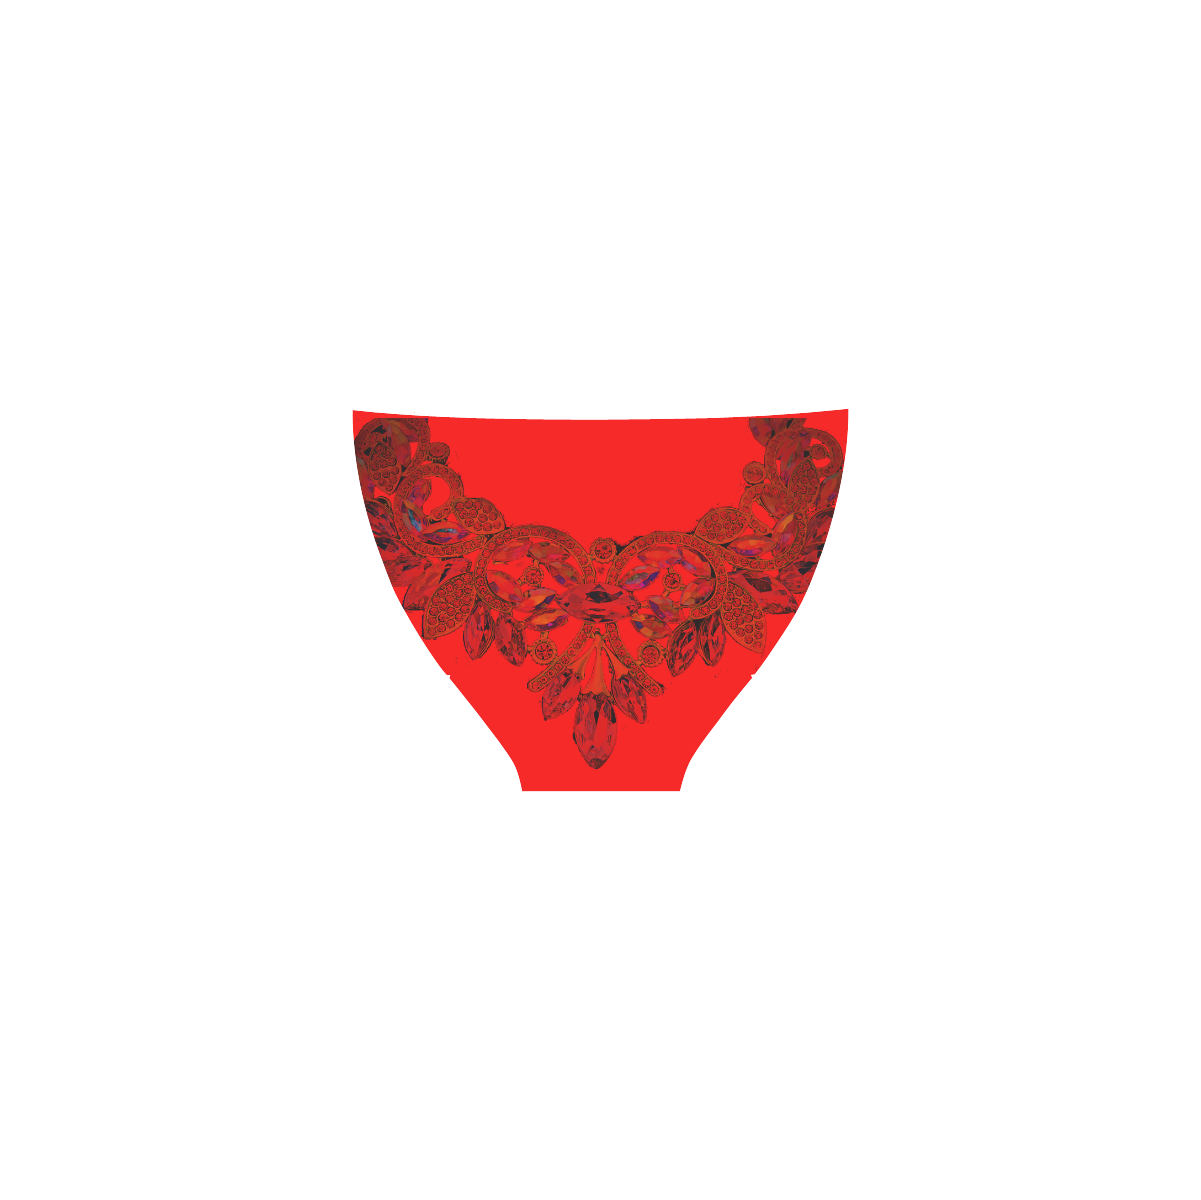 Bikini Swimsuit Red Rhinestone Necklace Swimwear Sizes S M L Custom Bikini Swimsuit (Model S01)